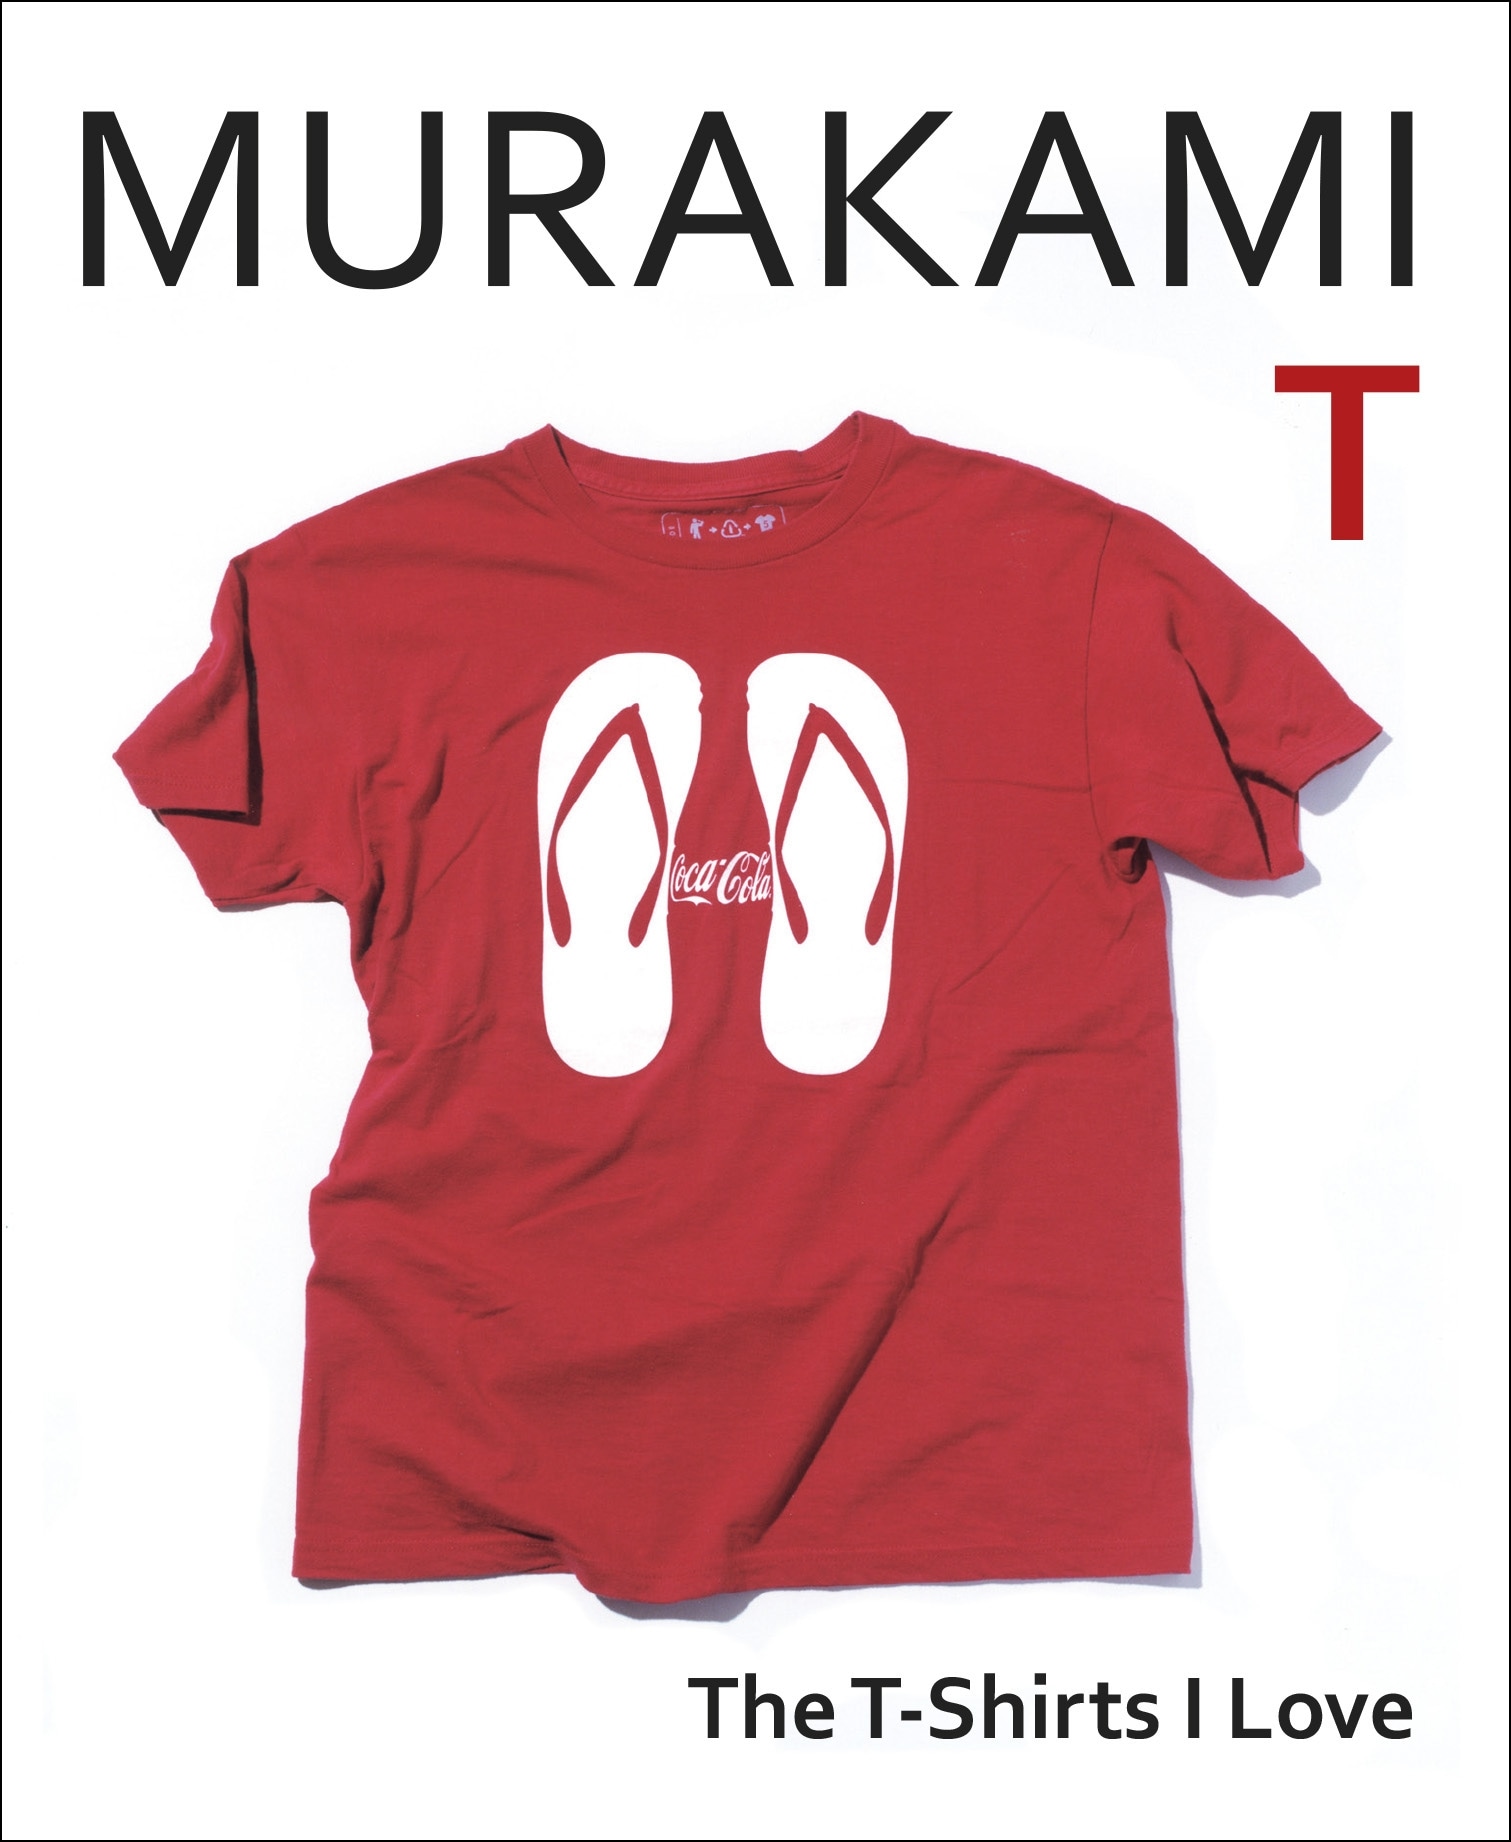 Book “Murakami T” by Haruki Murakami — November 16, 2021